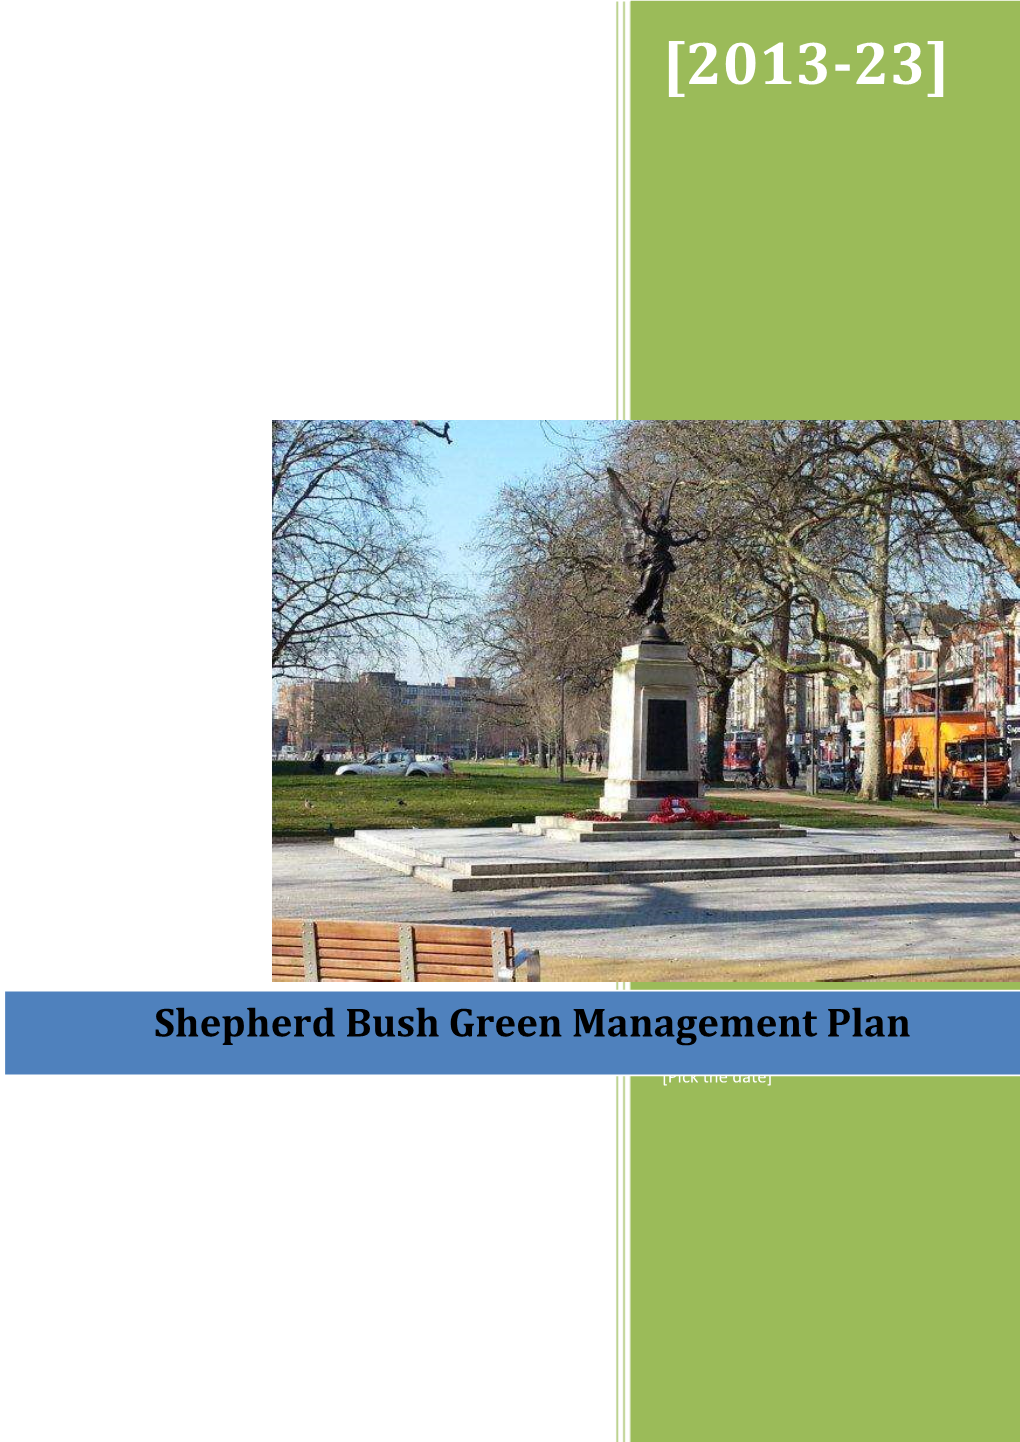 Shepherds Bush Green Management Plan 2013-23